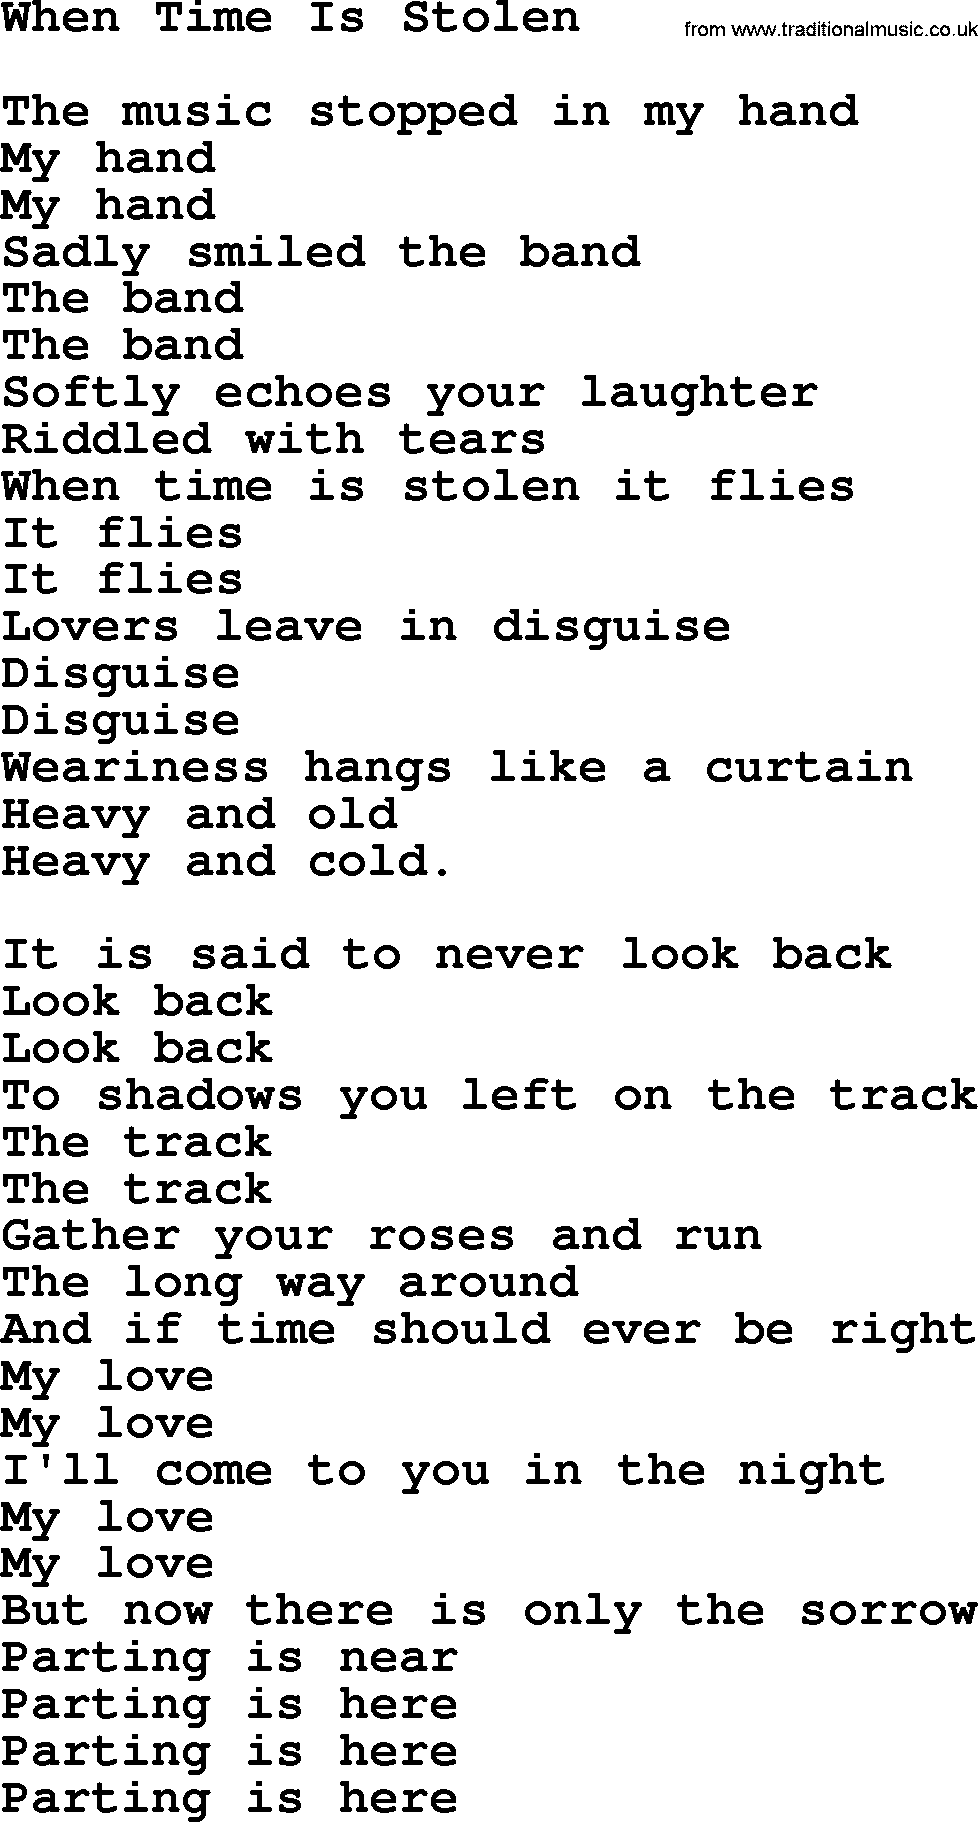 Joan Baez song When Time Is Stolen, lyrics